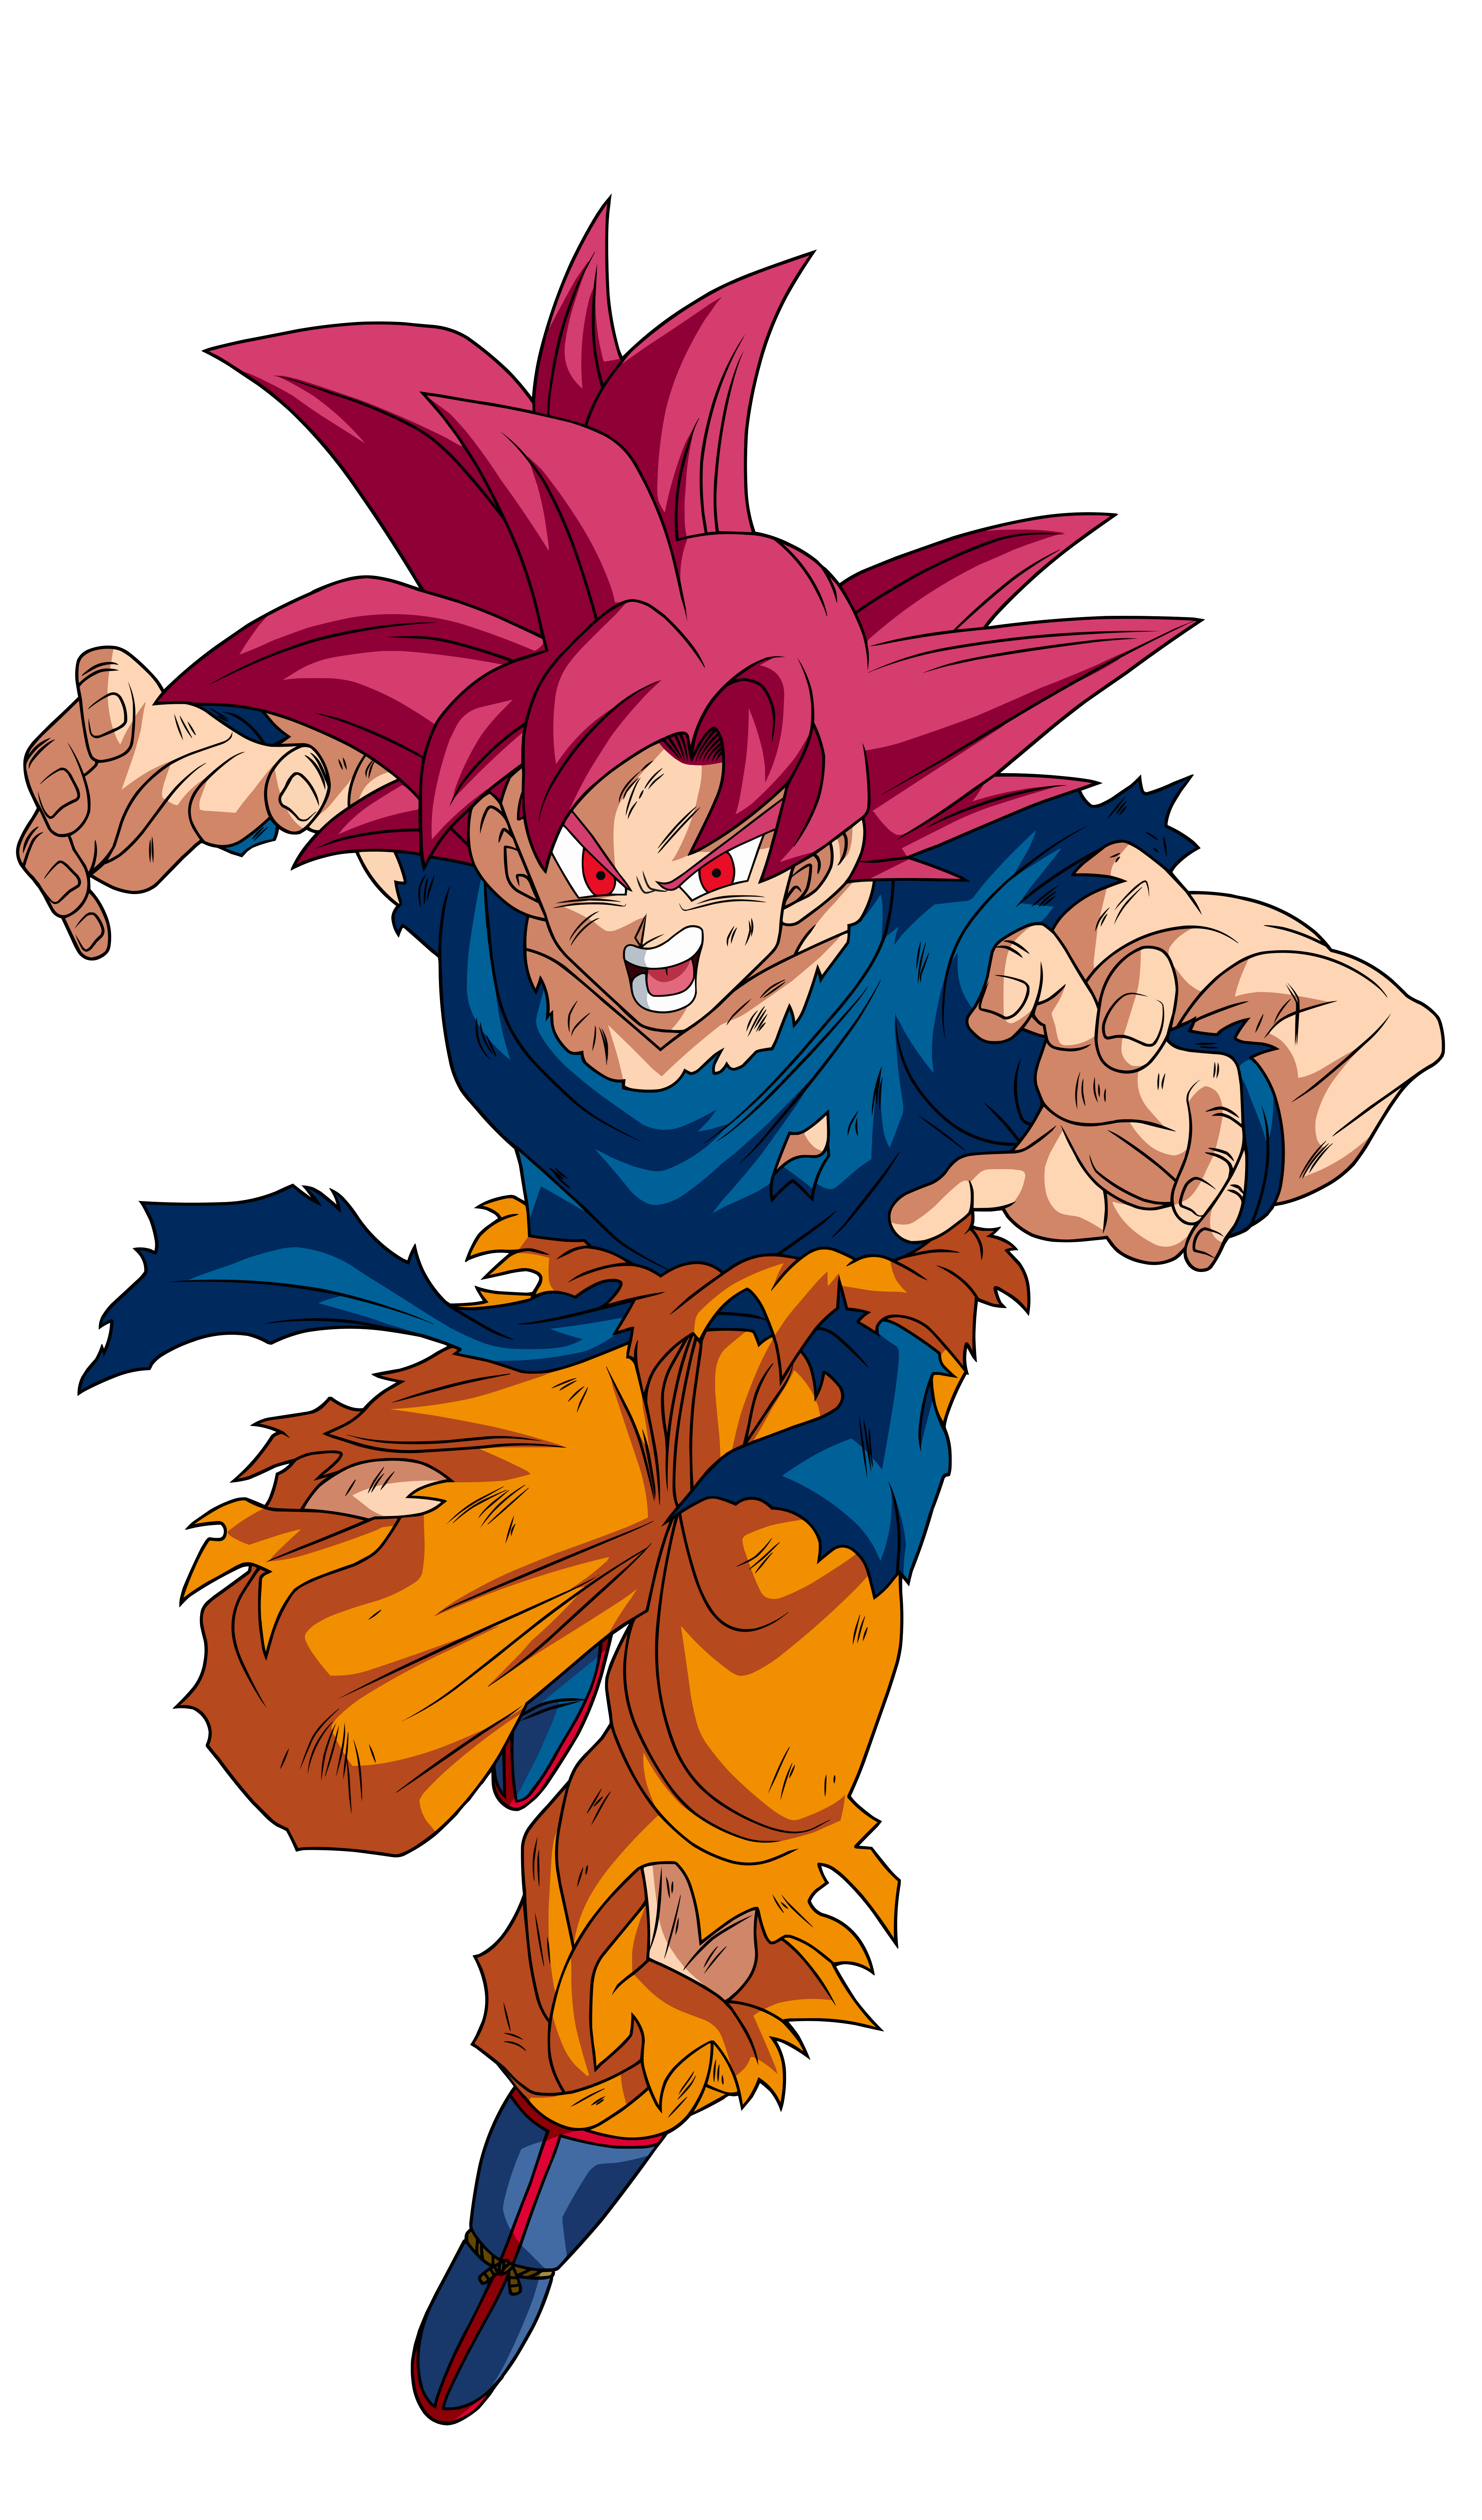 Goku (Namek Saga) SSJ  1 (DBS Broly Palette) by SSJROSE890 on